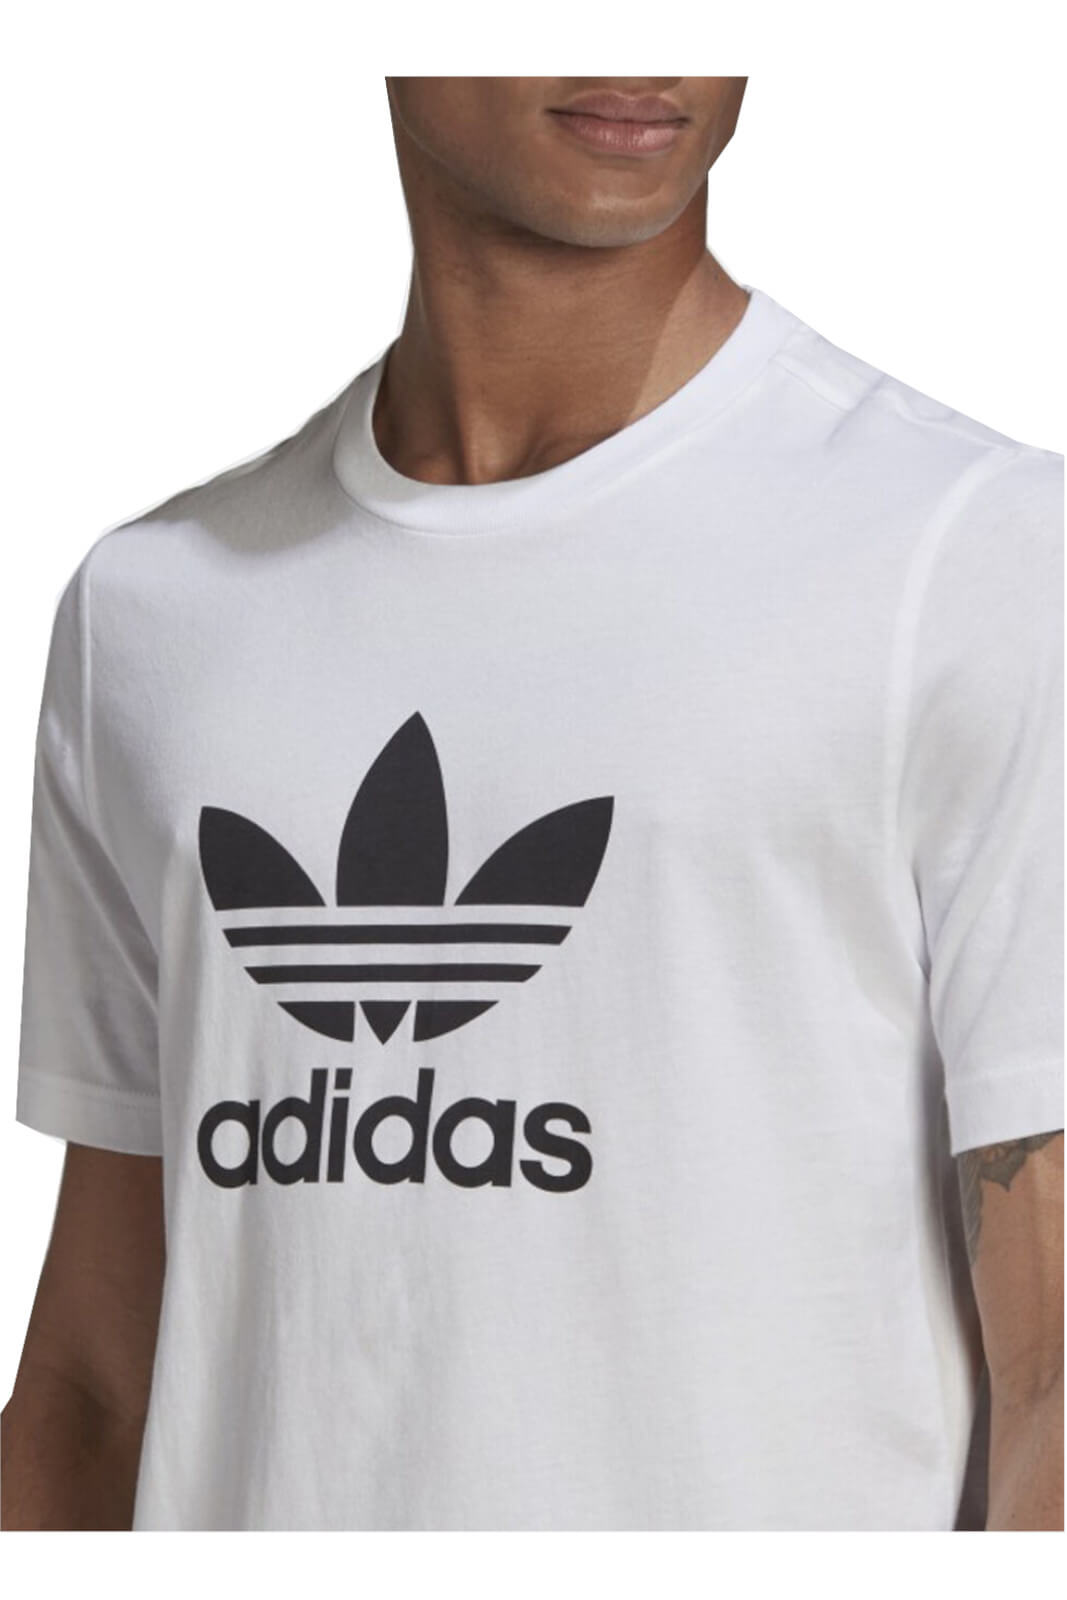 Adidas Men's T shirt in cotton